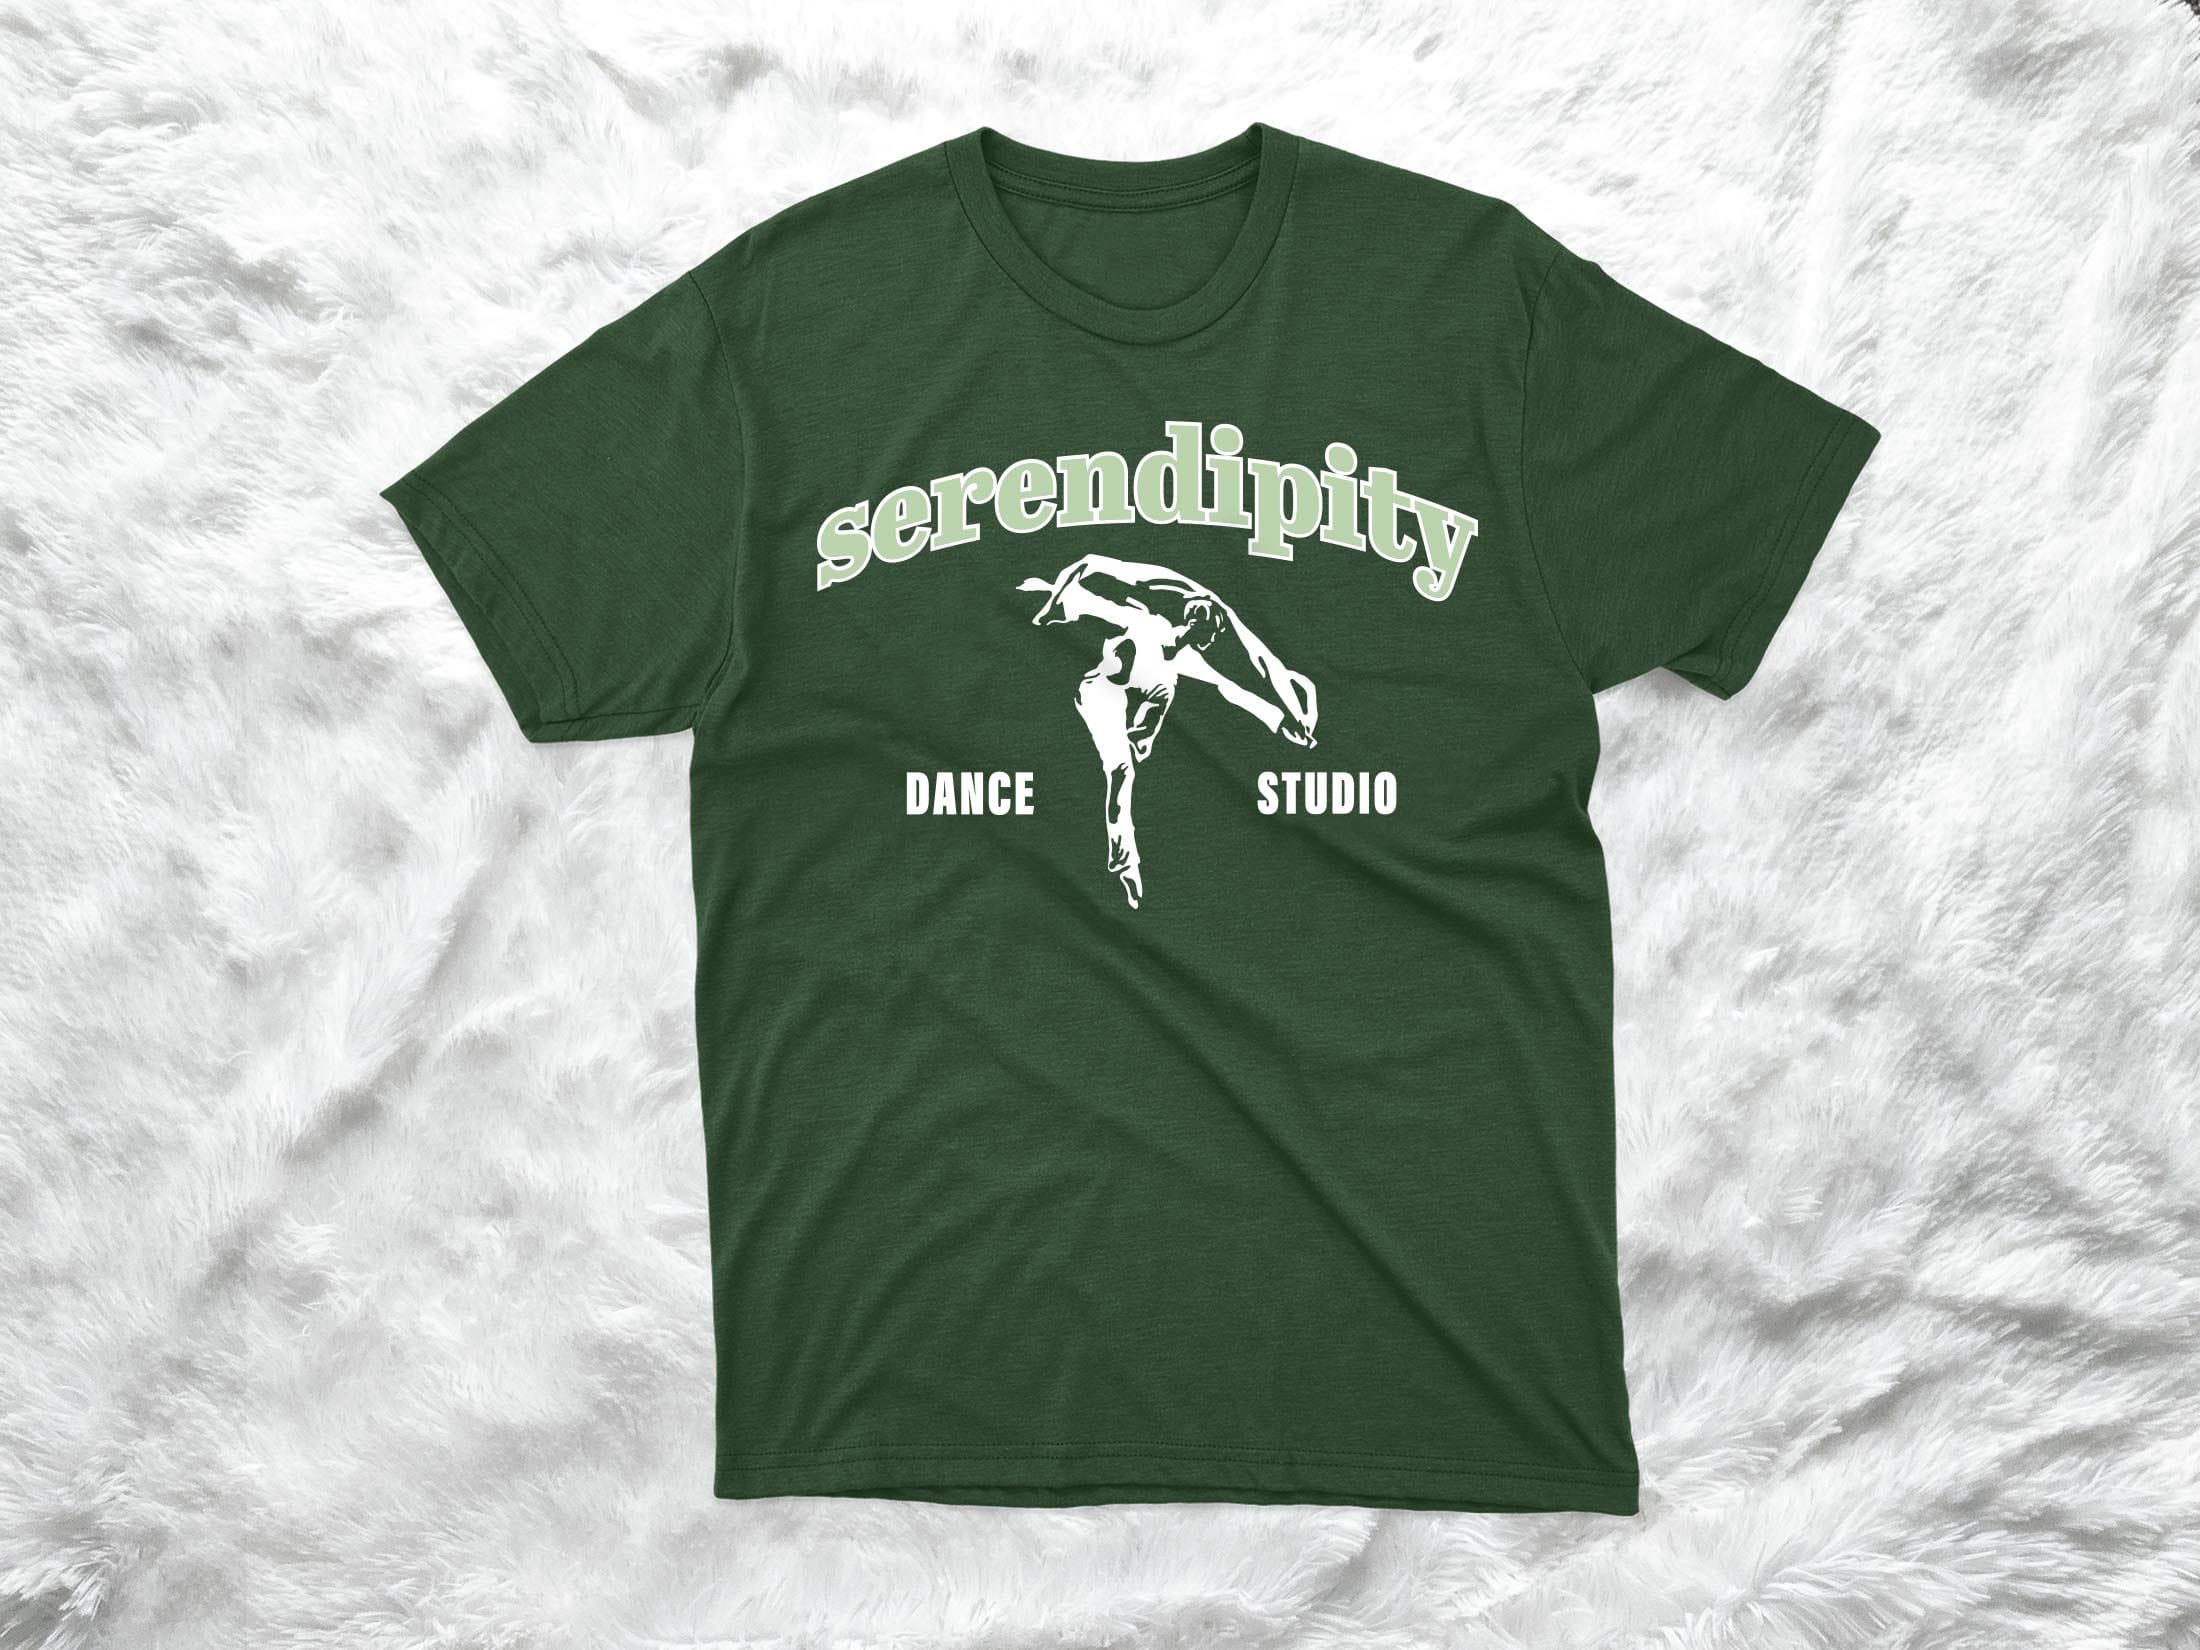 Serendipity Dance Studio Shirts and Sweatshirts